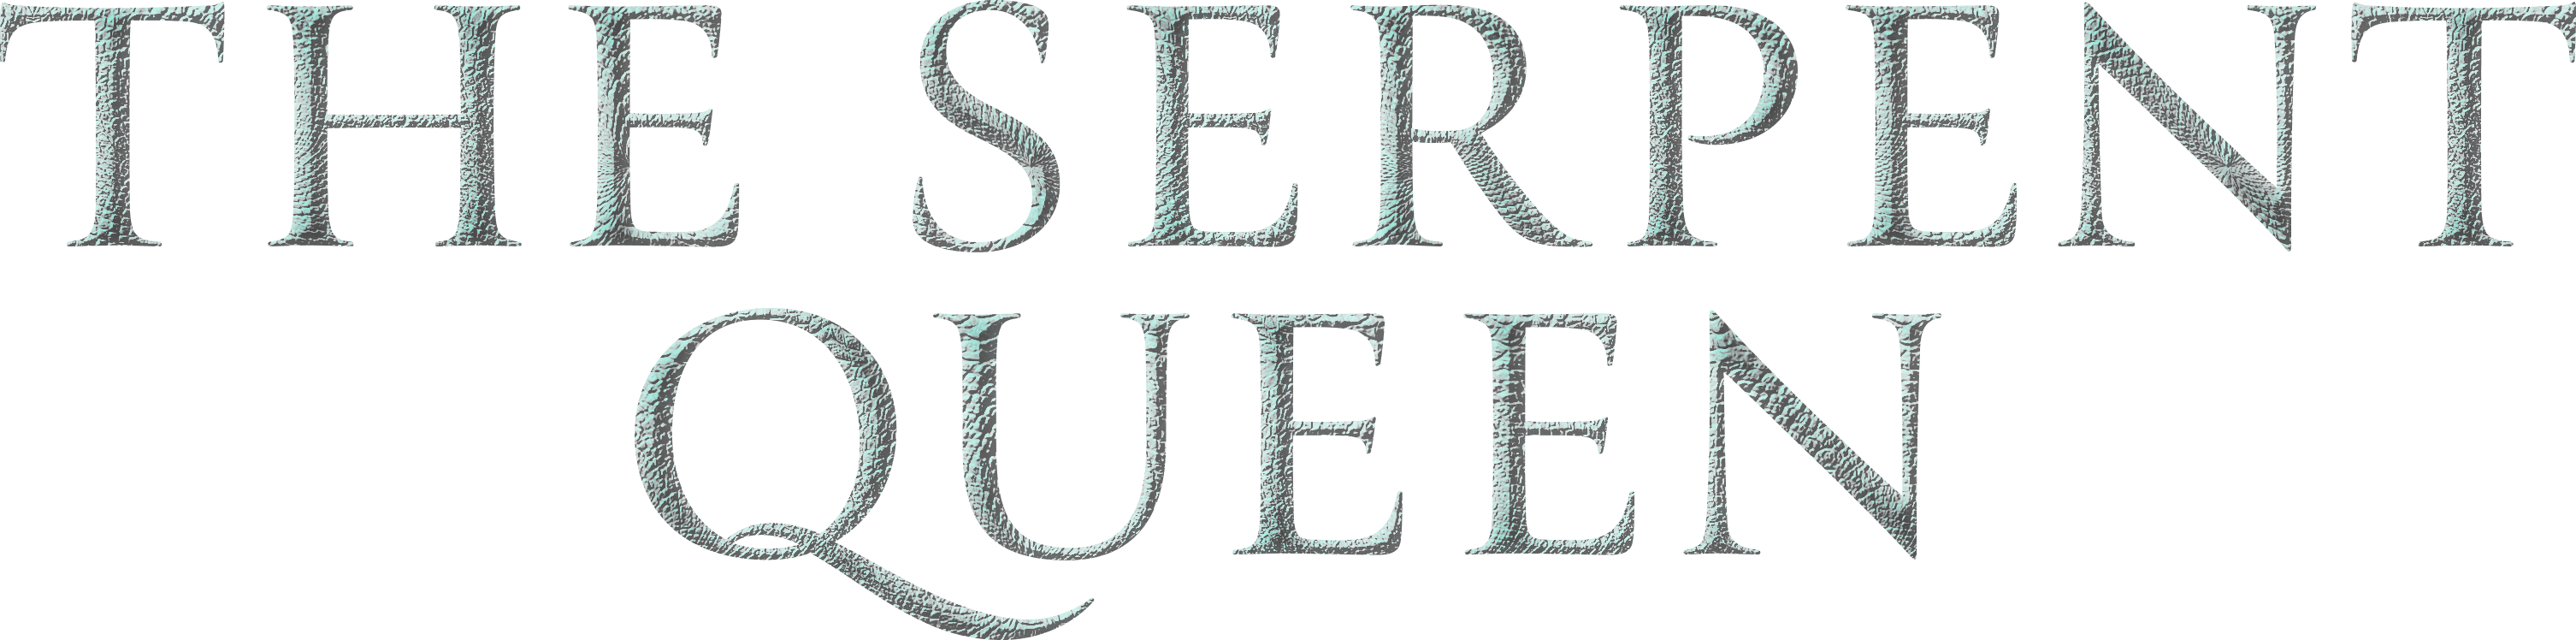 The Serpent Queen logo